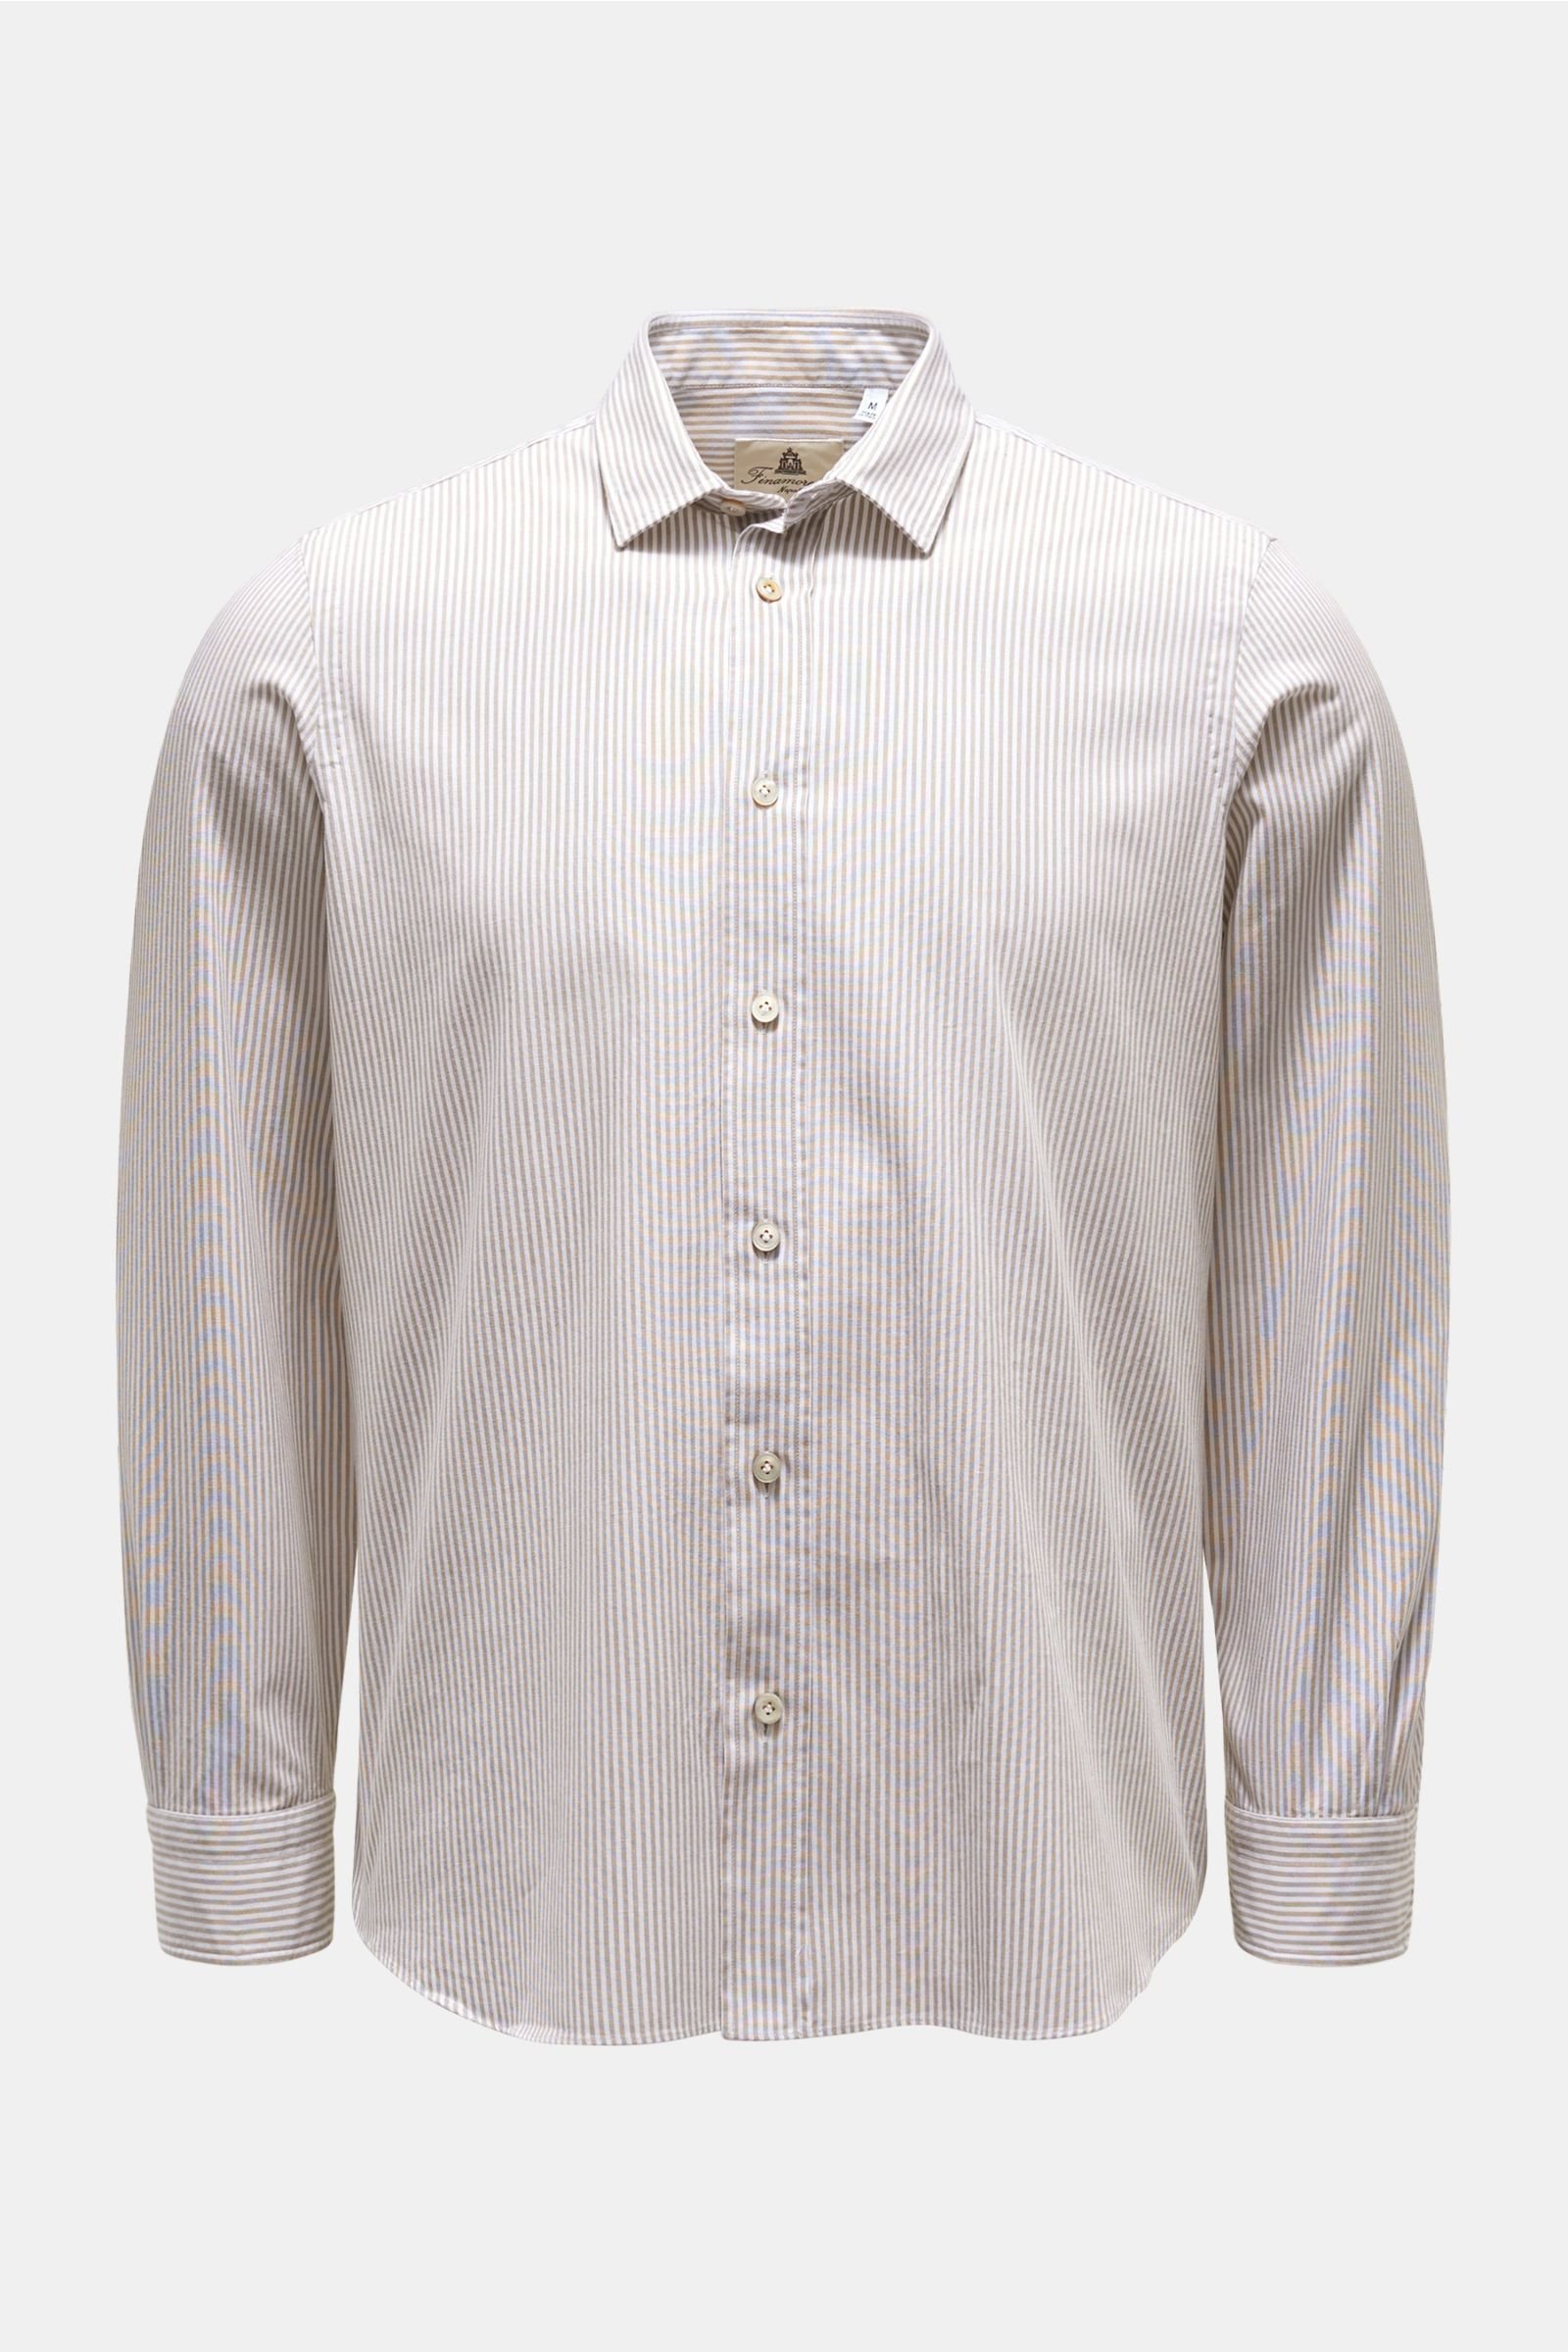 Chambray shirt 'Silvano Clark' with slim collar beige/white striped